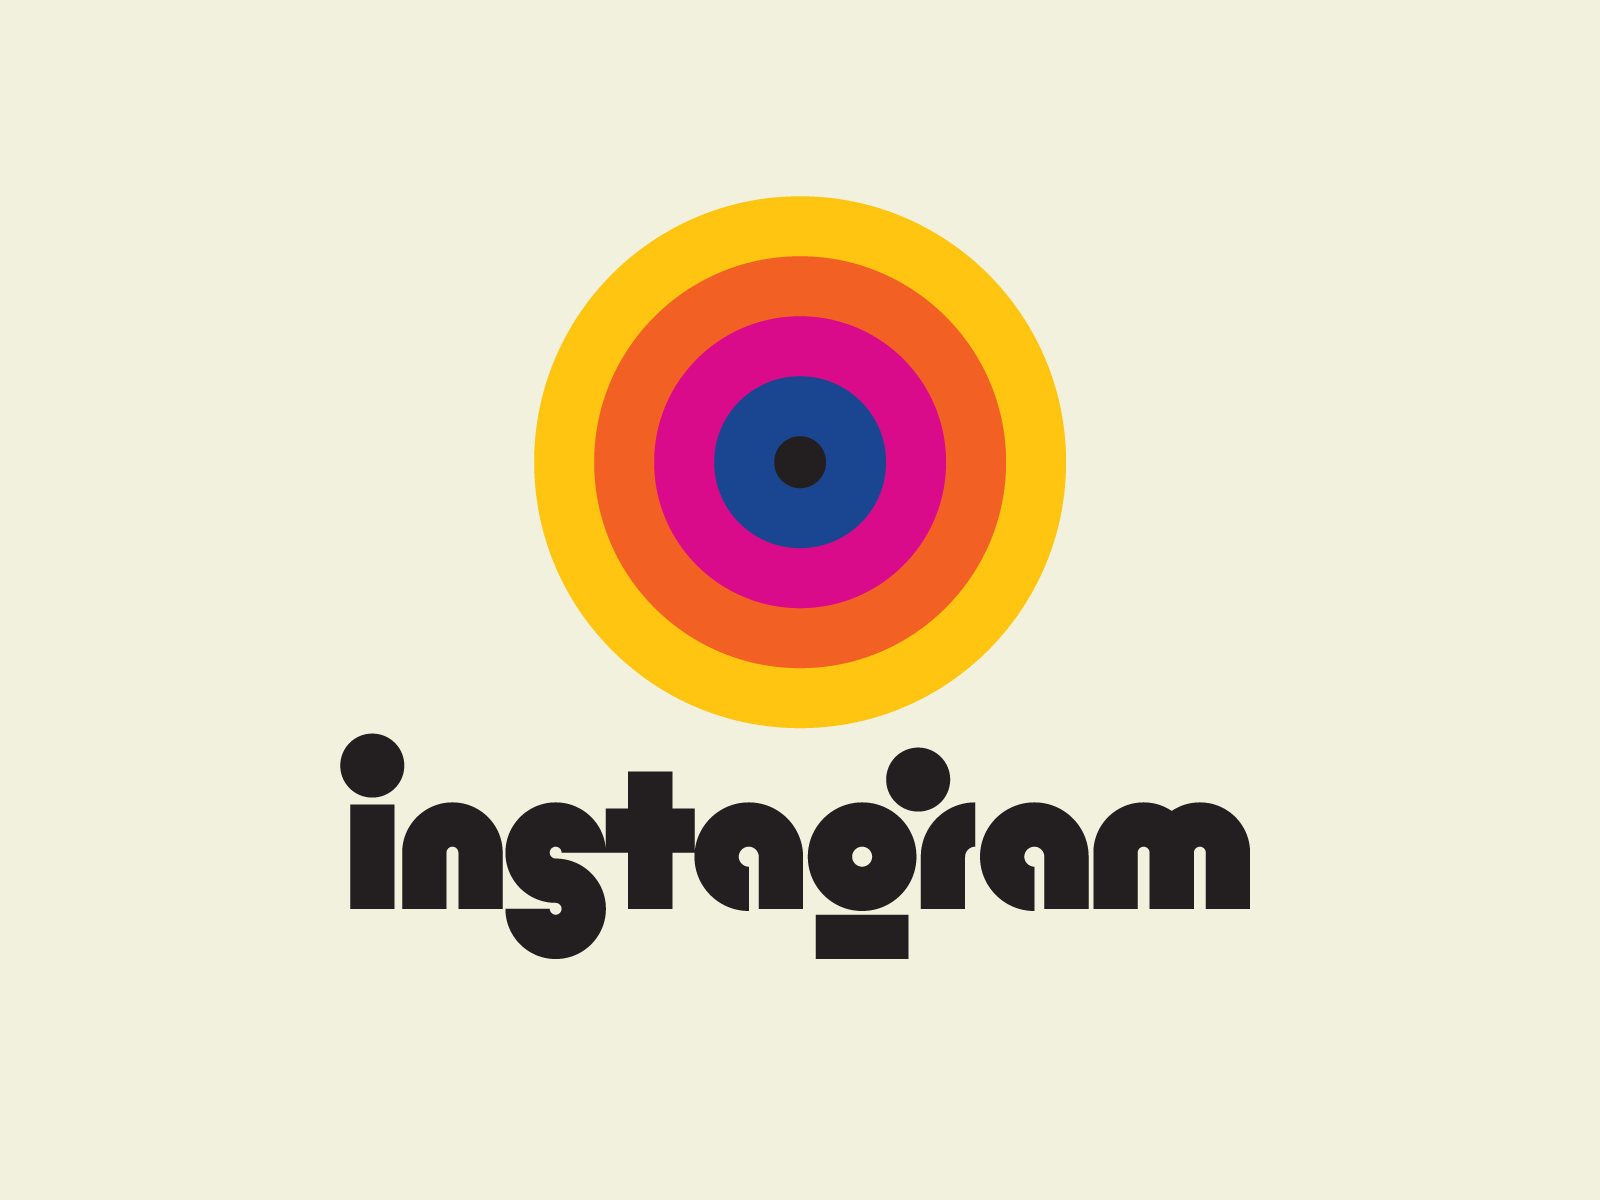 Retro Instagram logo